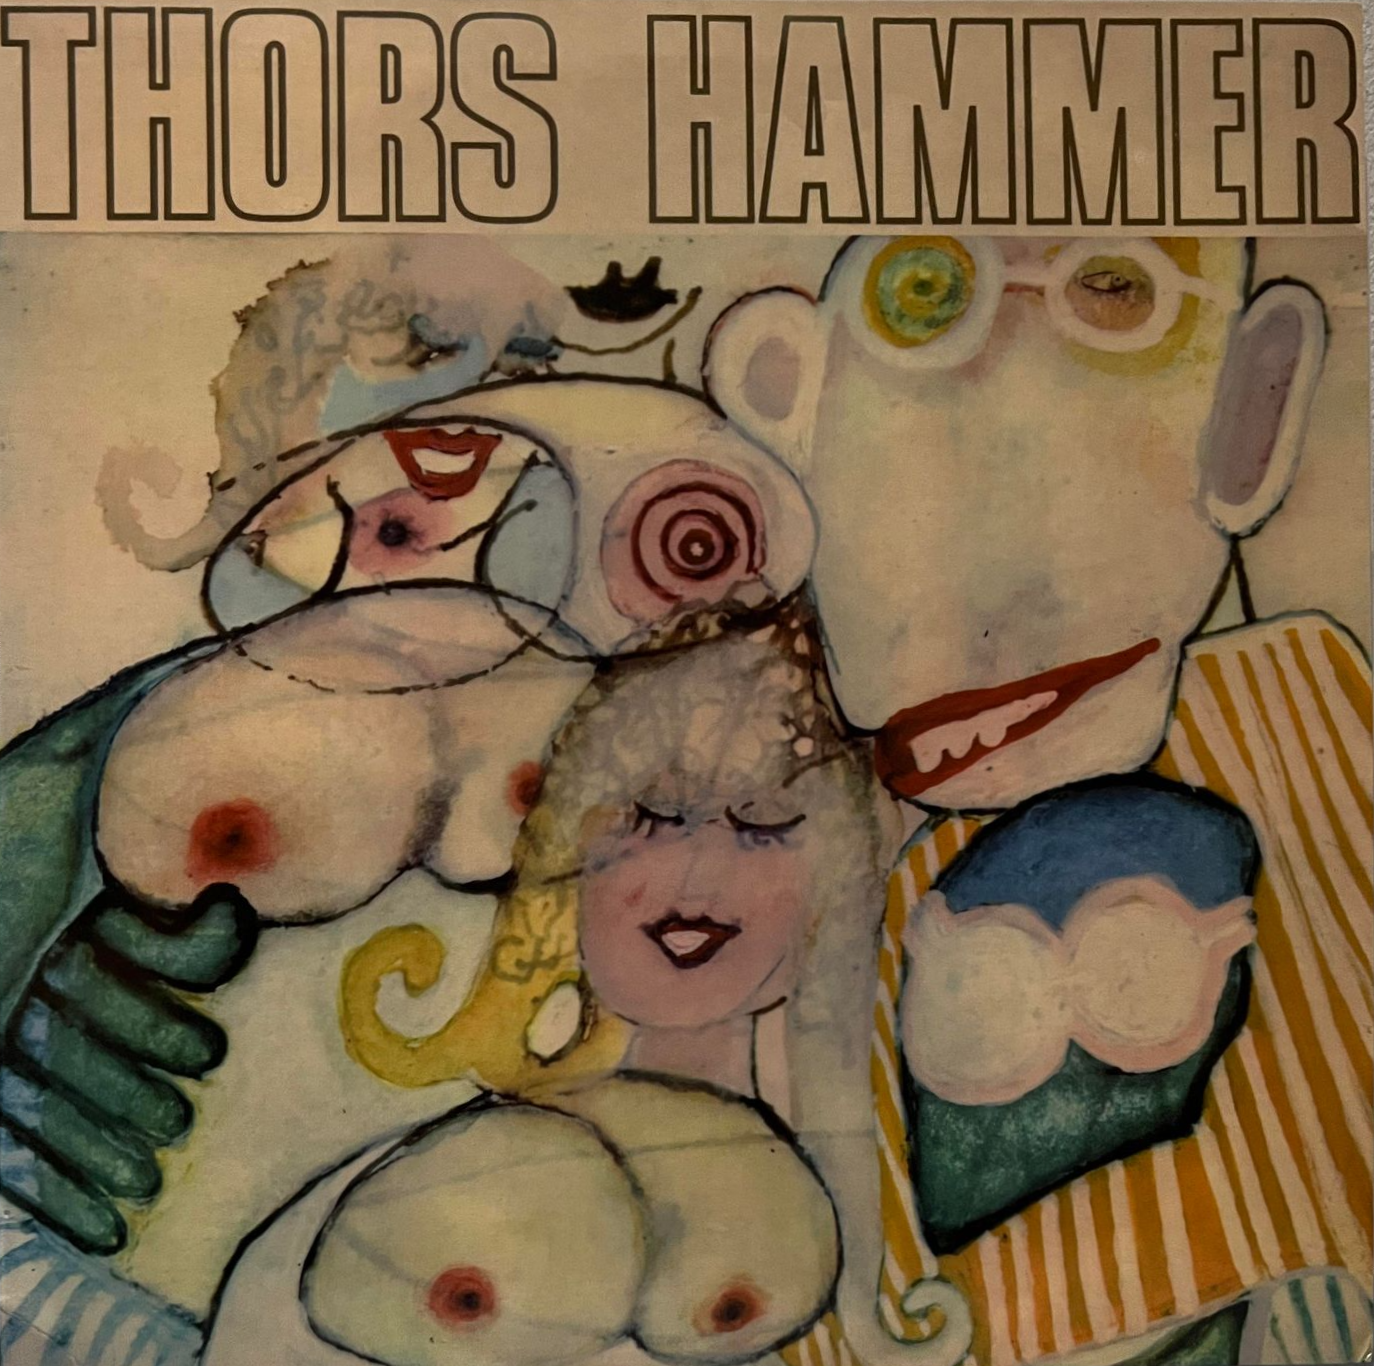 THORS HAMMER - THORS HAMMER